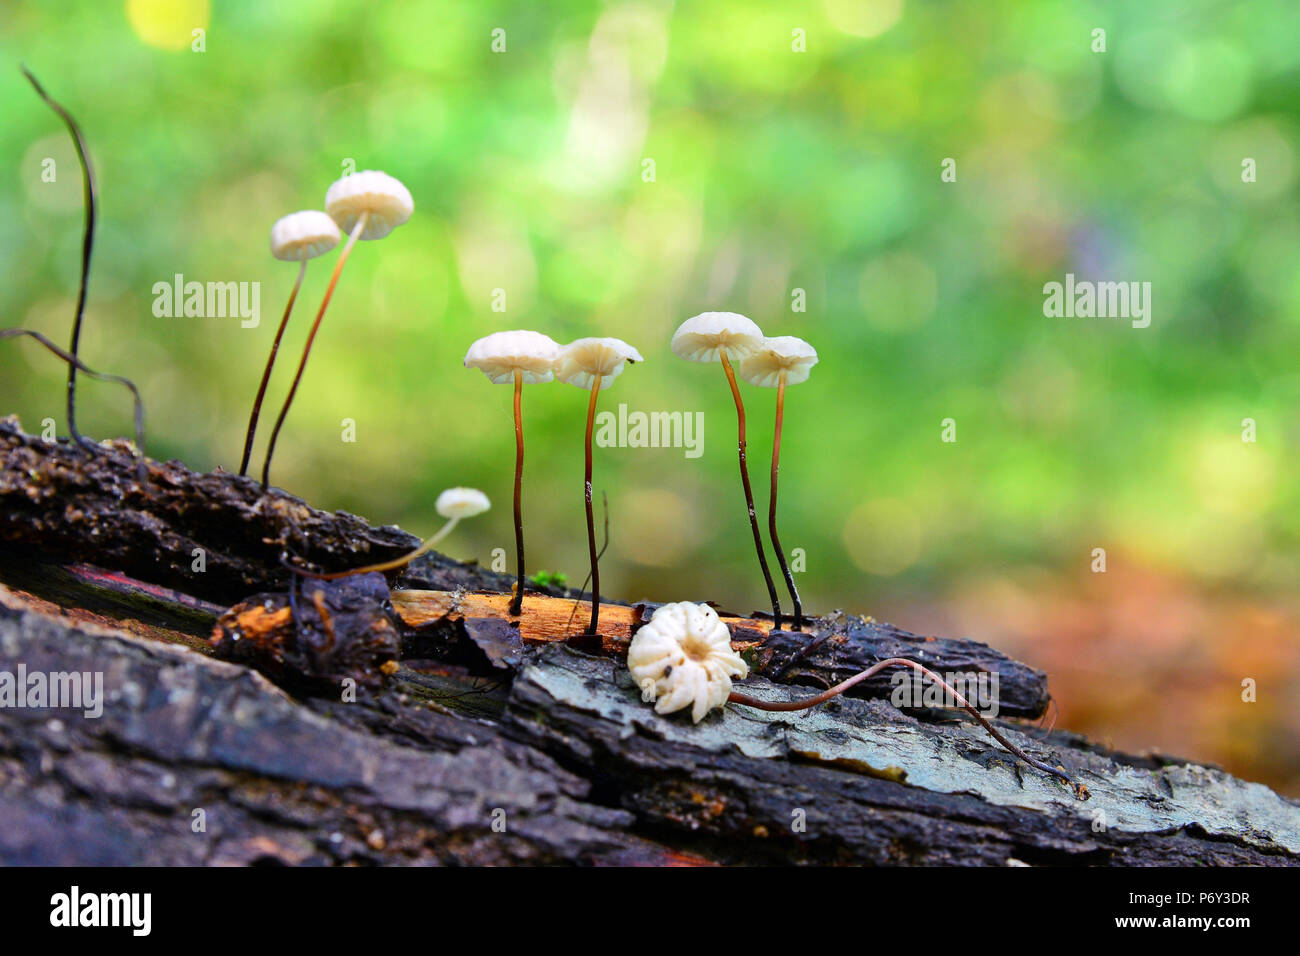 marasmius epiphyllus mushroom on old tree trunk Stock Photo